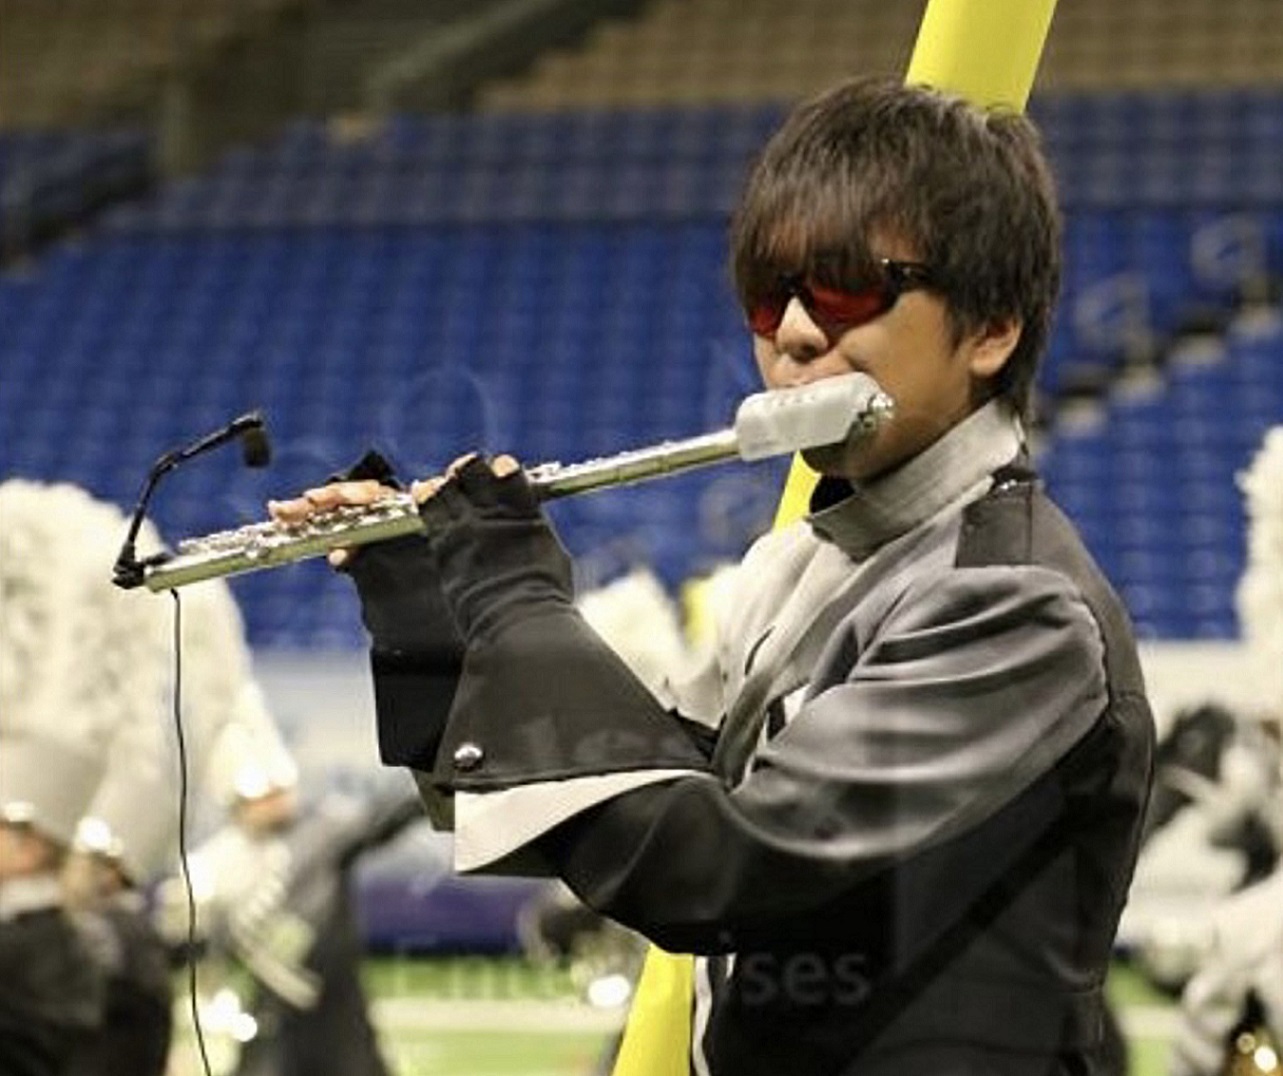 Tomok playing flute